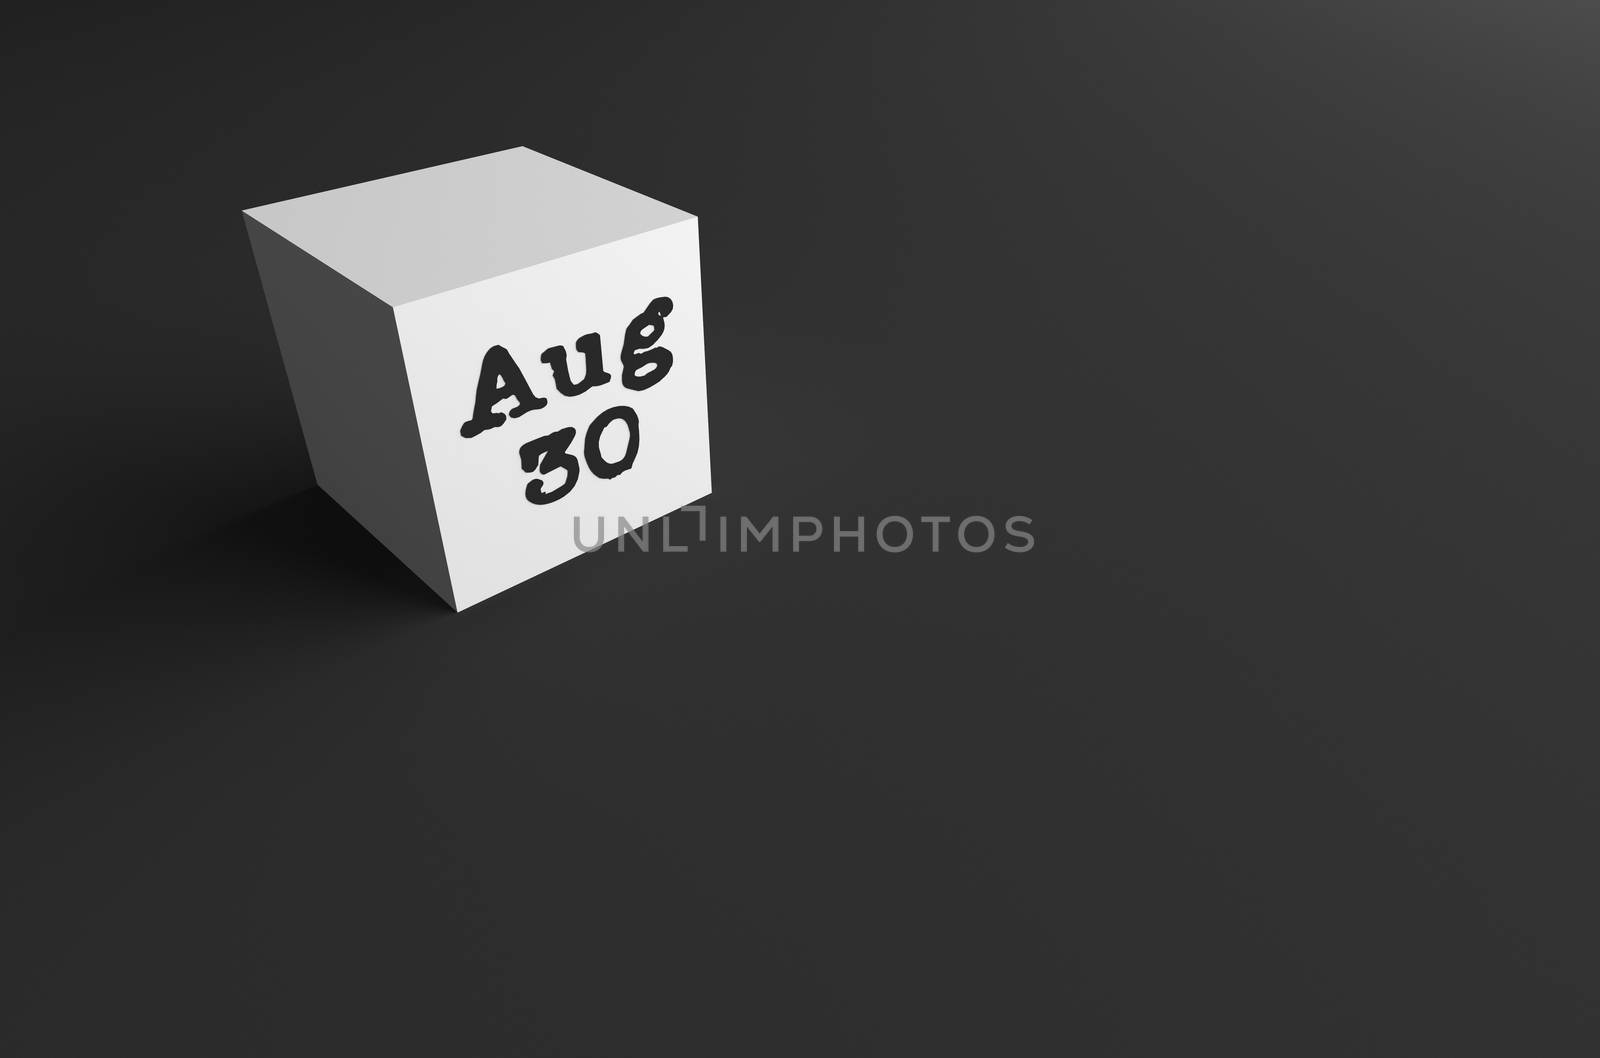 3D RENDERING OF Aug 30 by PrettyTG